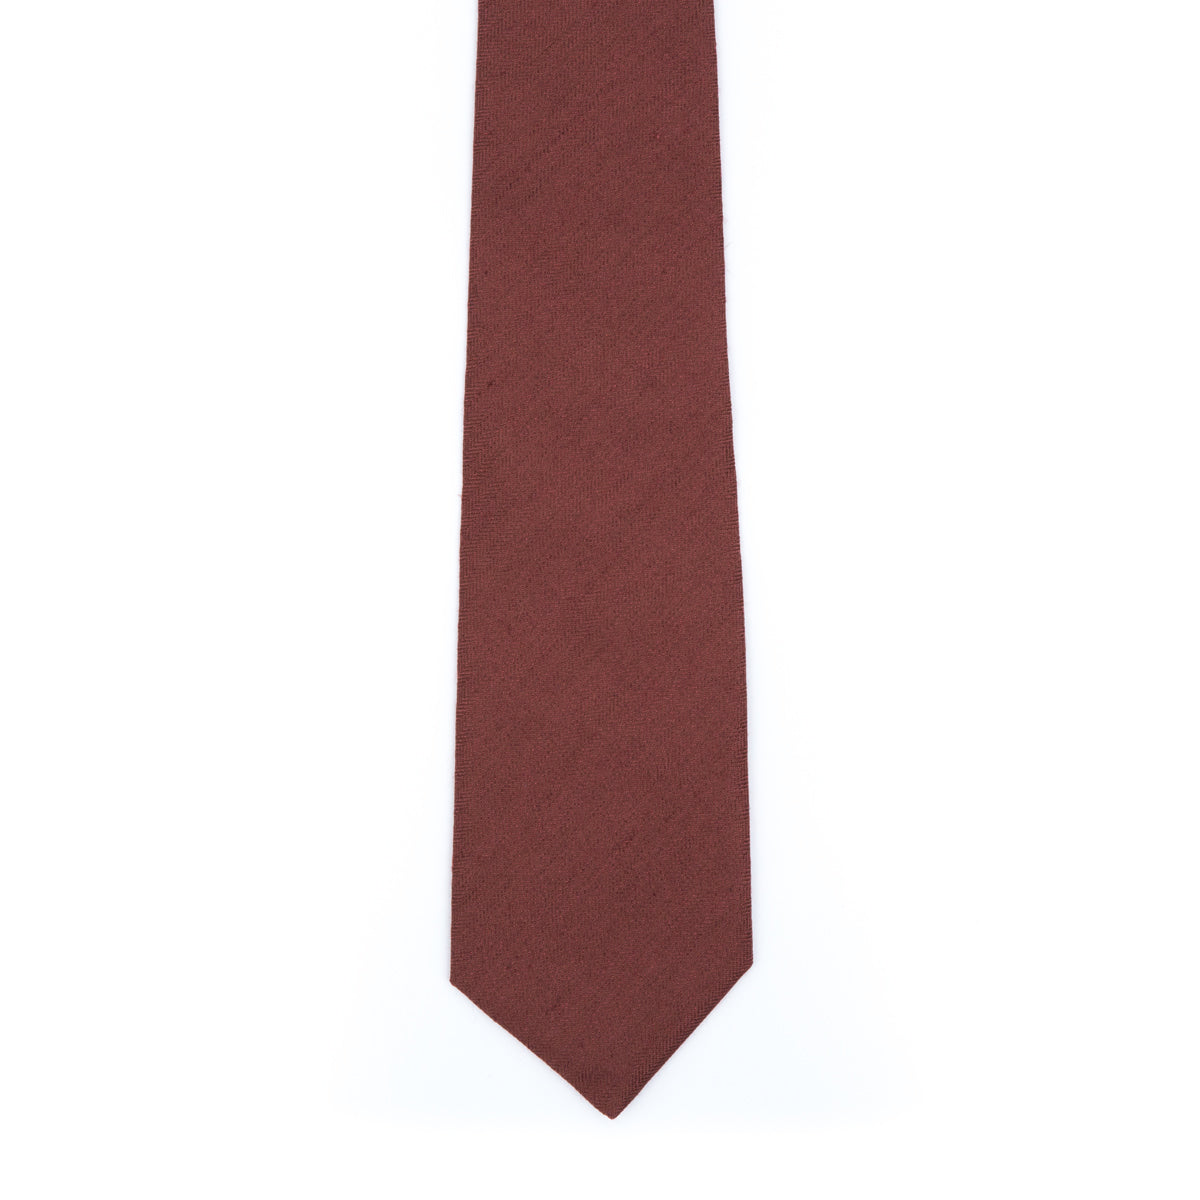 Smooth chestnut herringbone tie